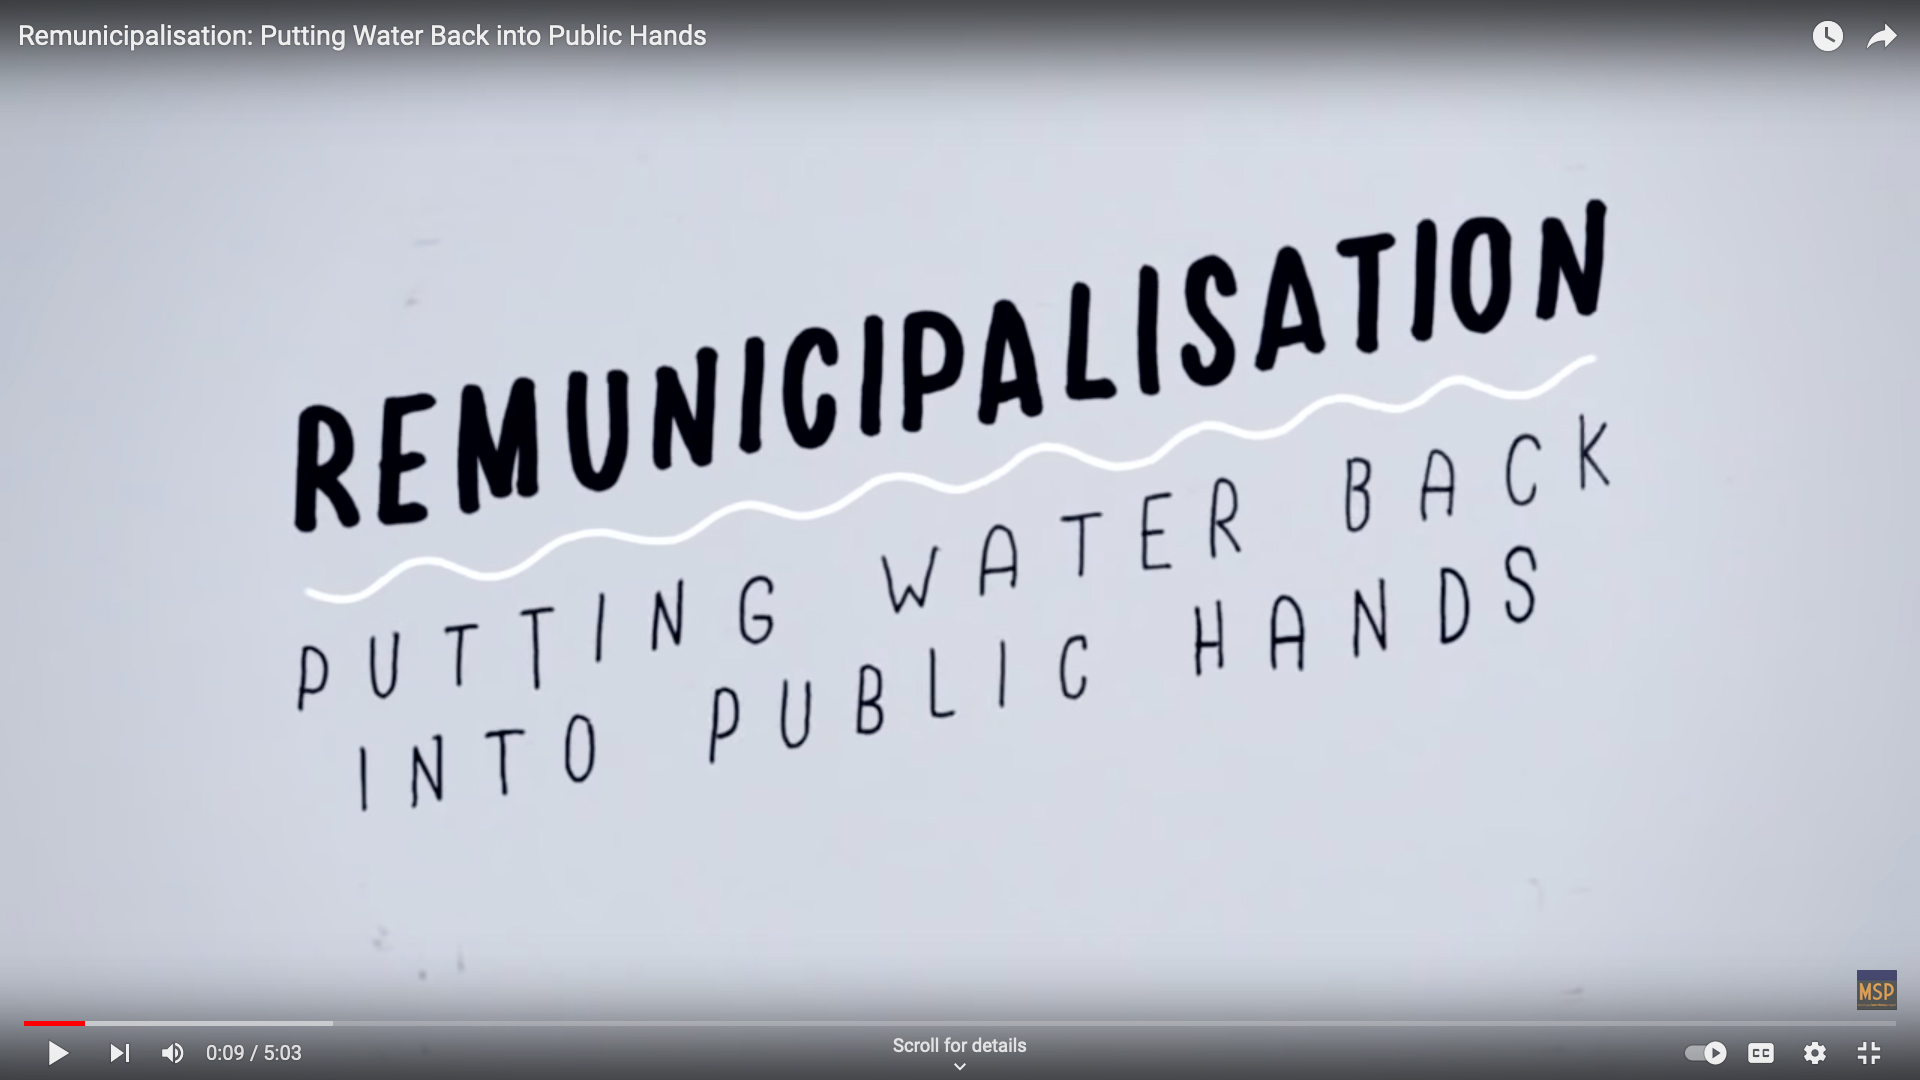 Remunicipalisation: Putting Water Back into Public Hands image